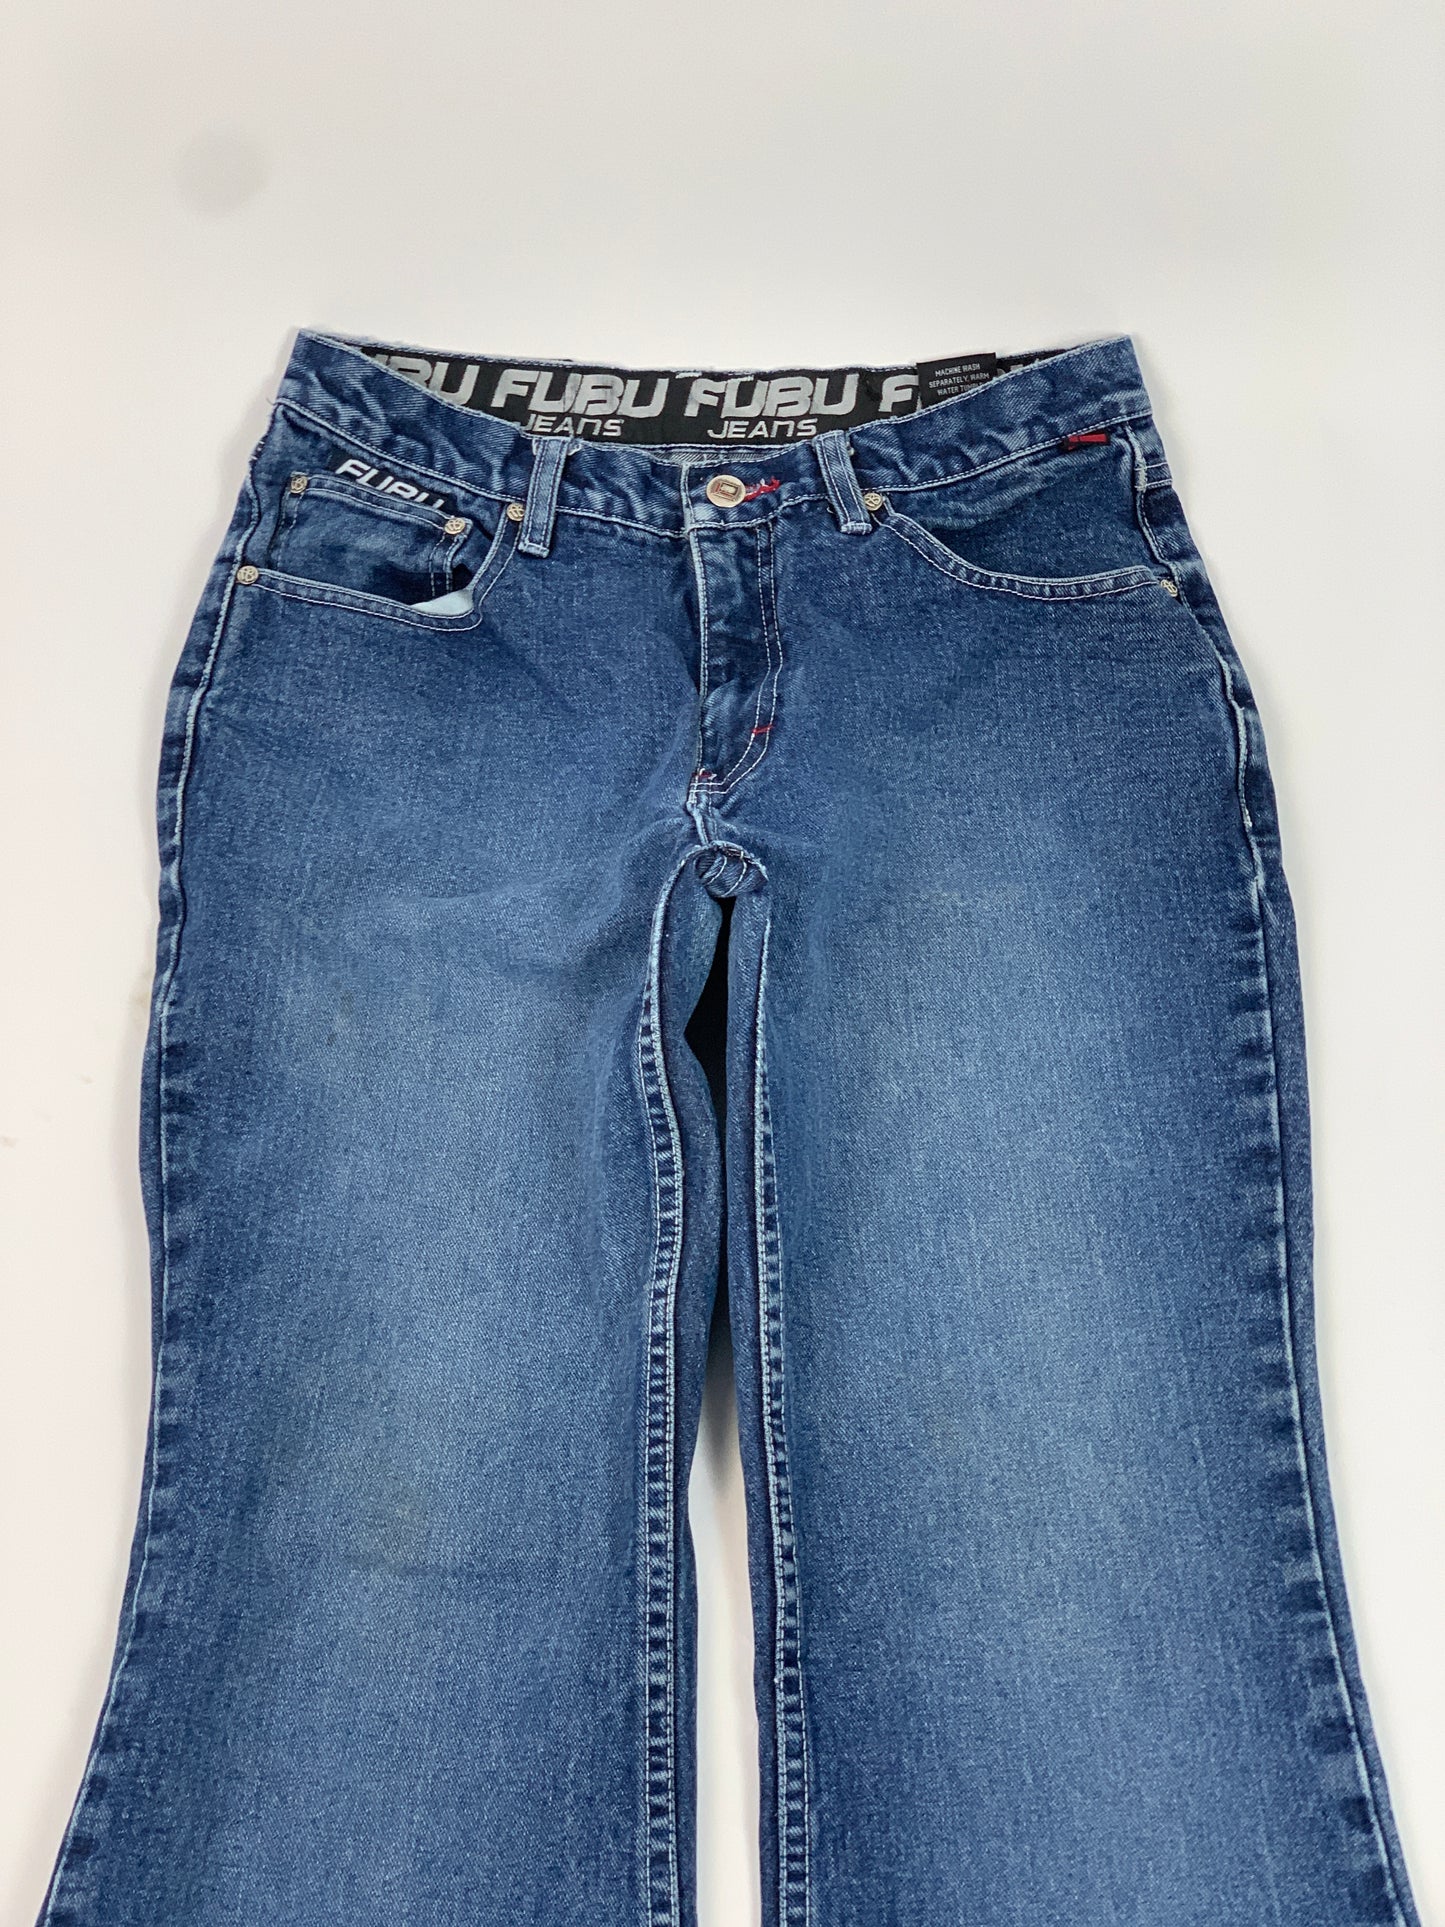 Fubu Vintage Flair Jeans - 30